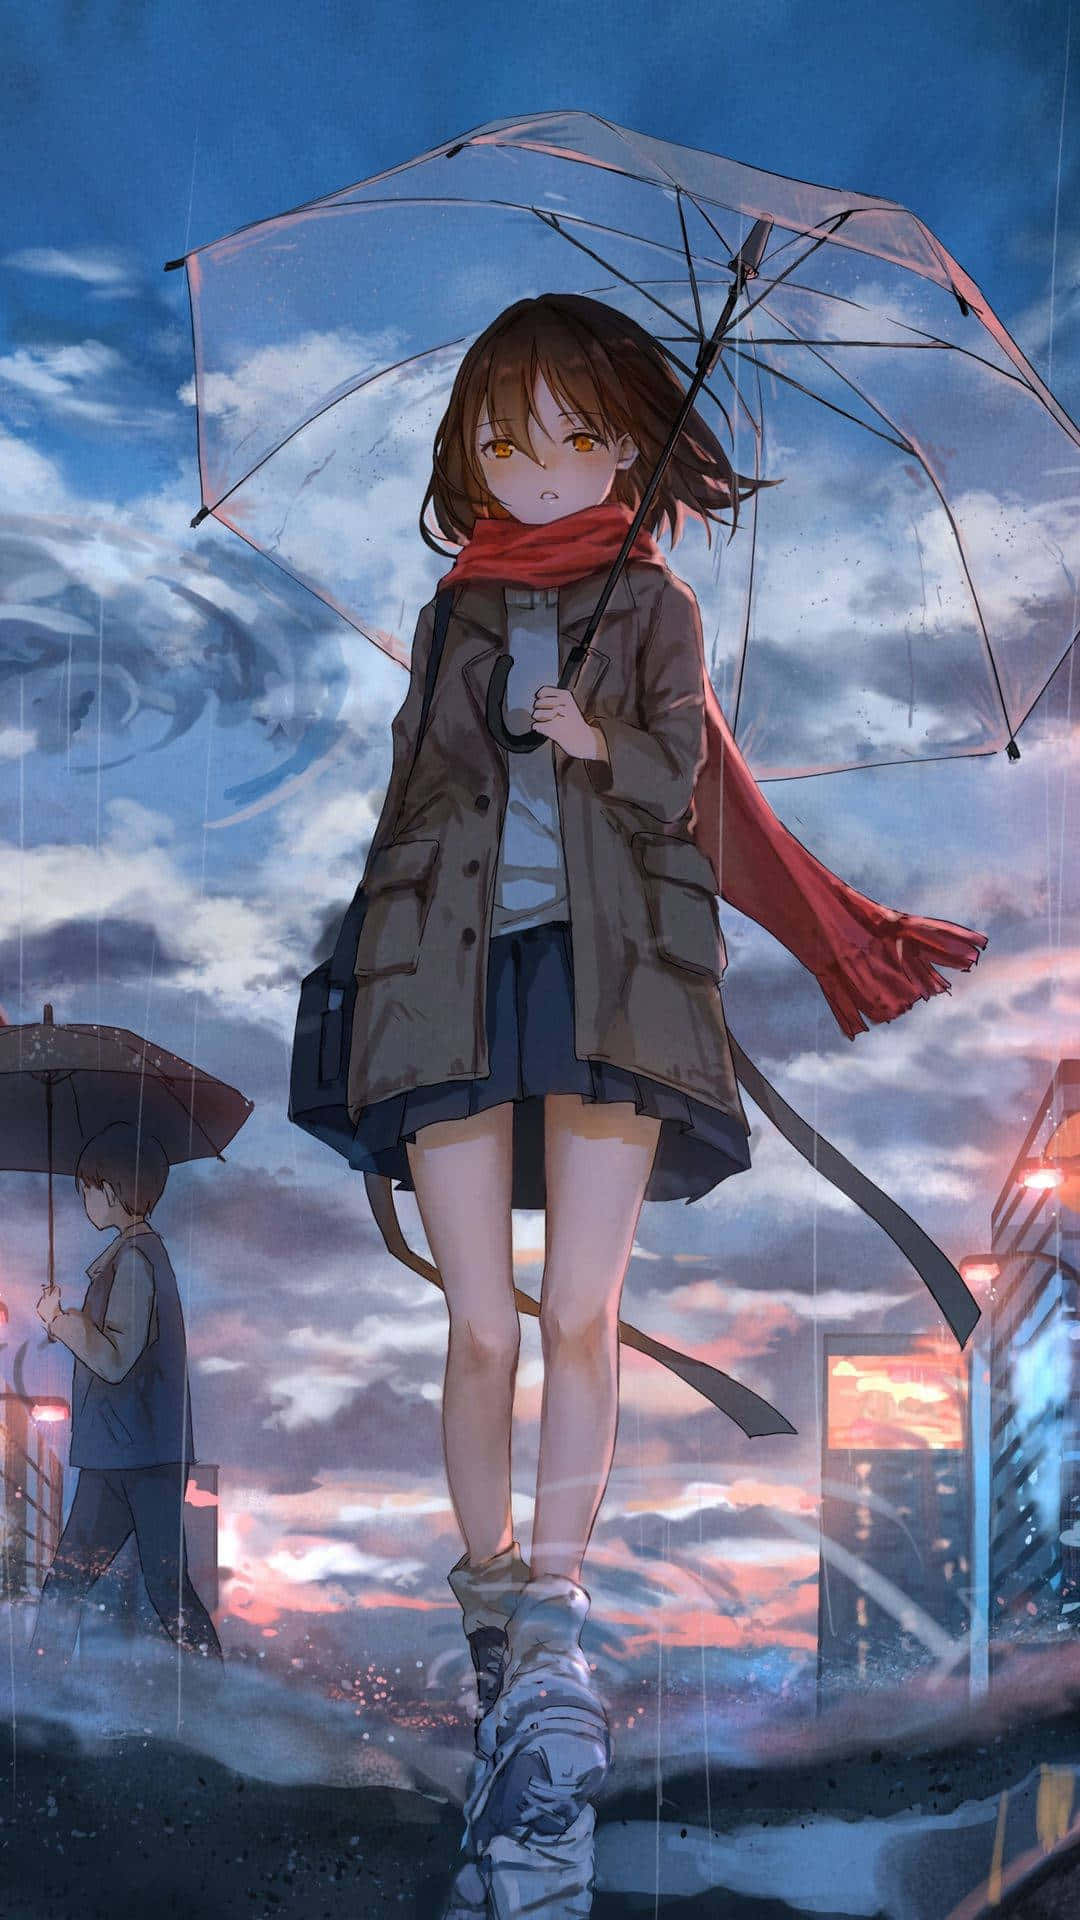 Anime Single Woman With Umbrella Wallpaper